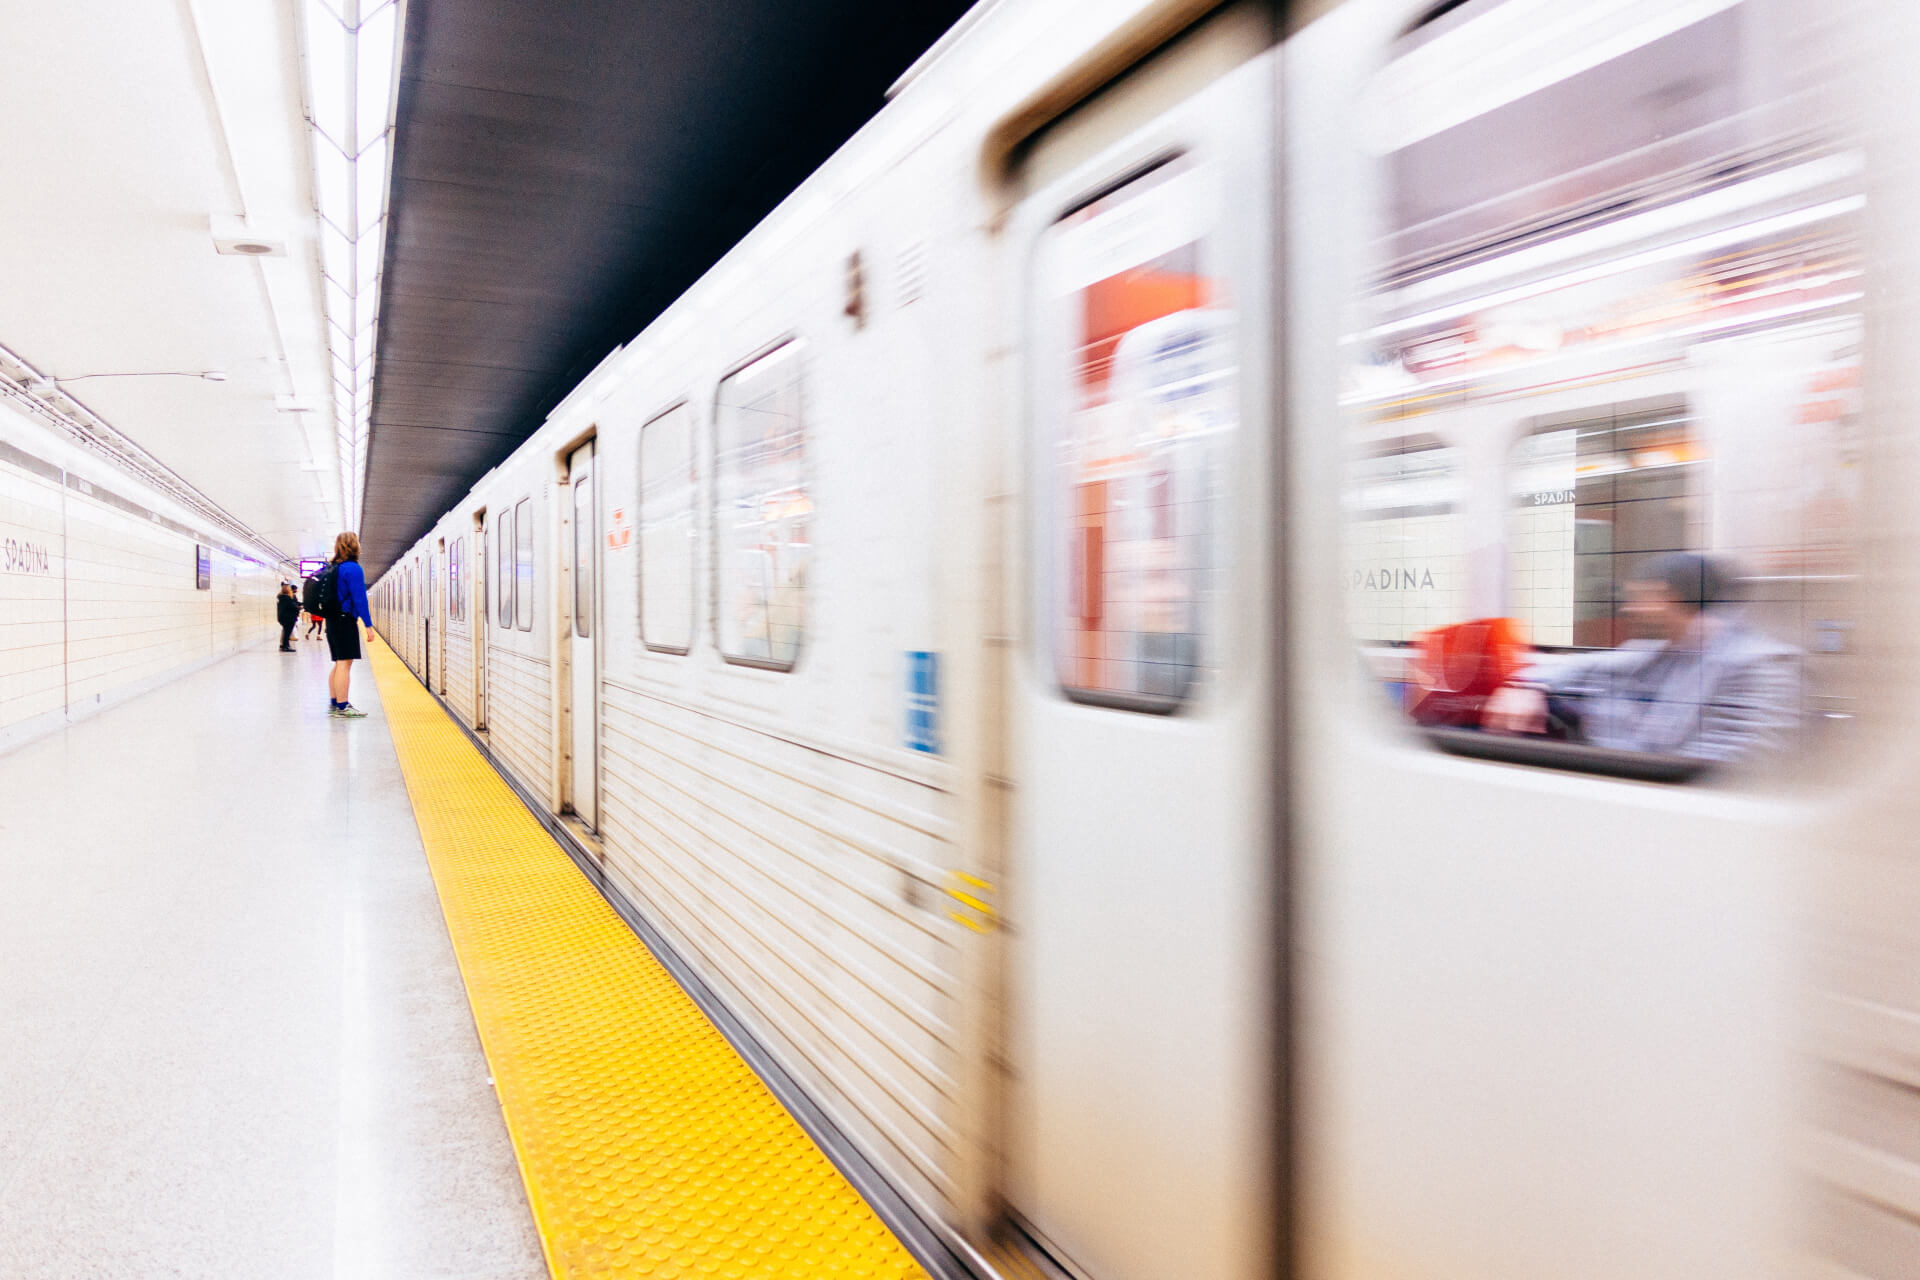 Toronto subway leaving the station